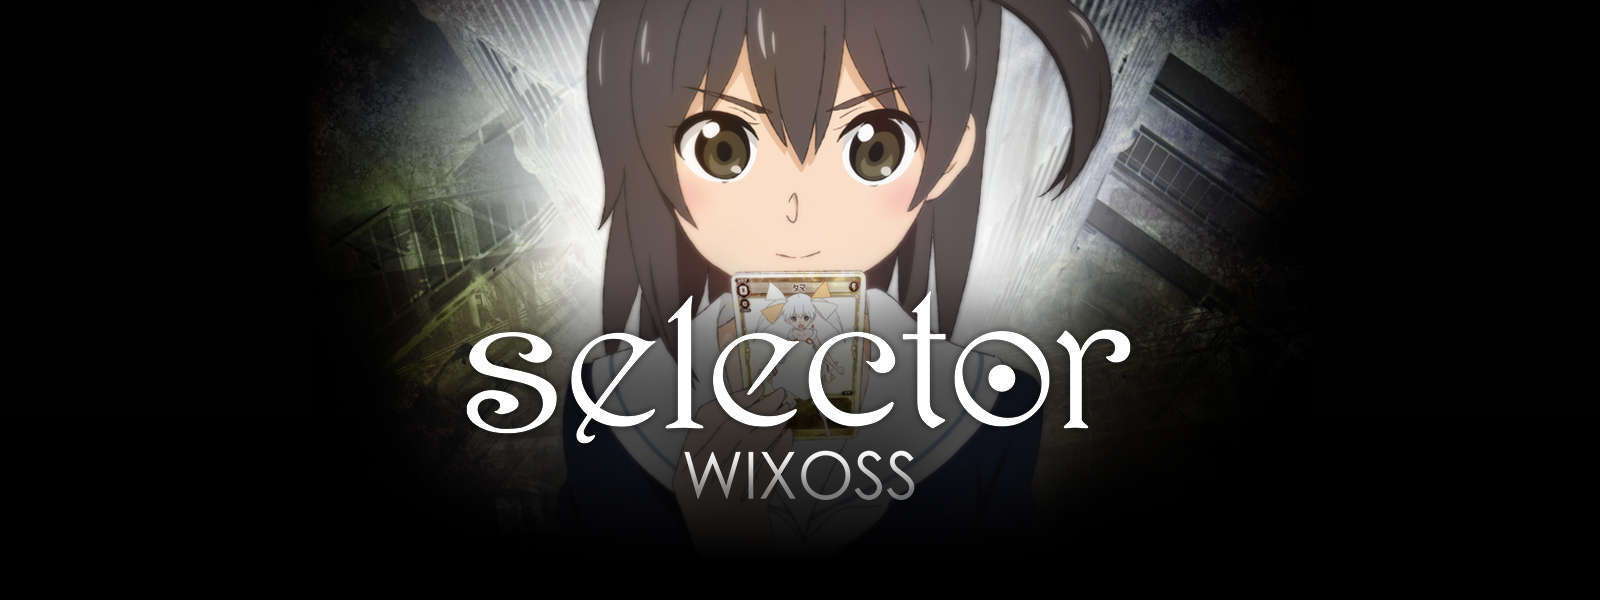 Crunchyroll Adds Lostorage conflated WIXOSS, My Sweet Tyrant